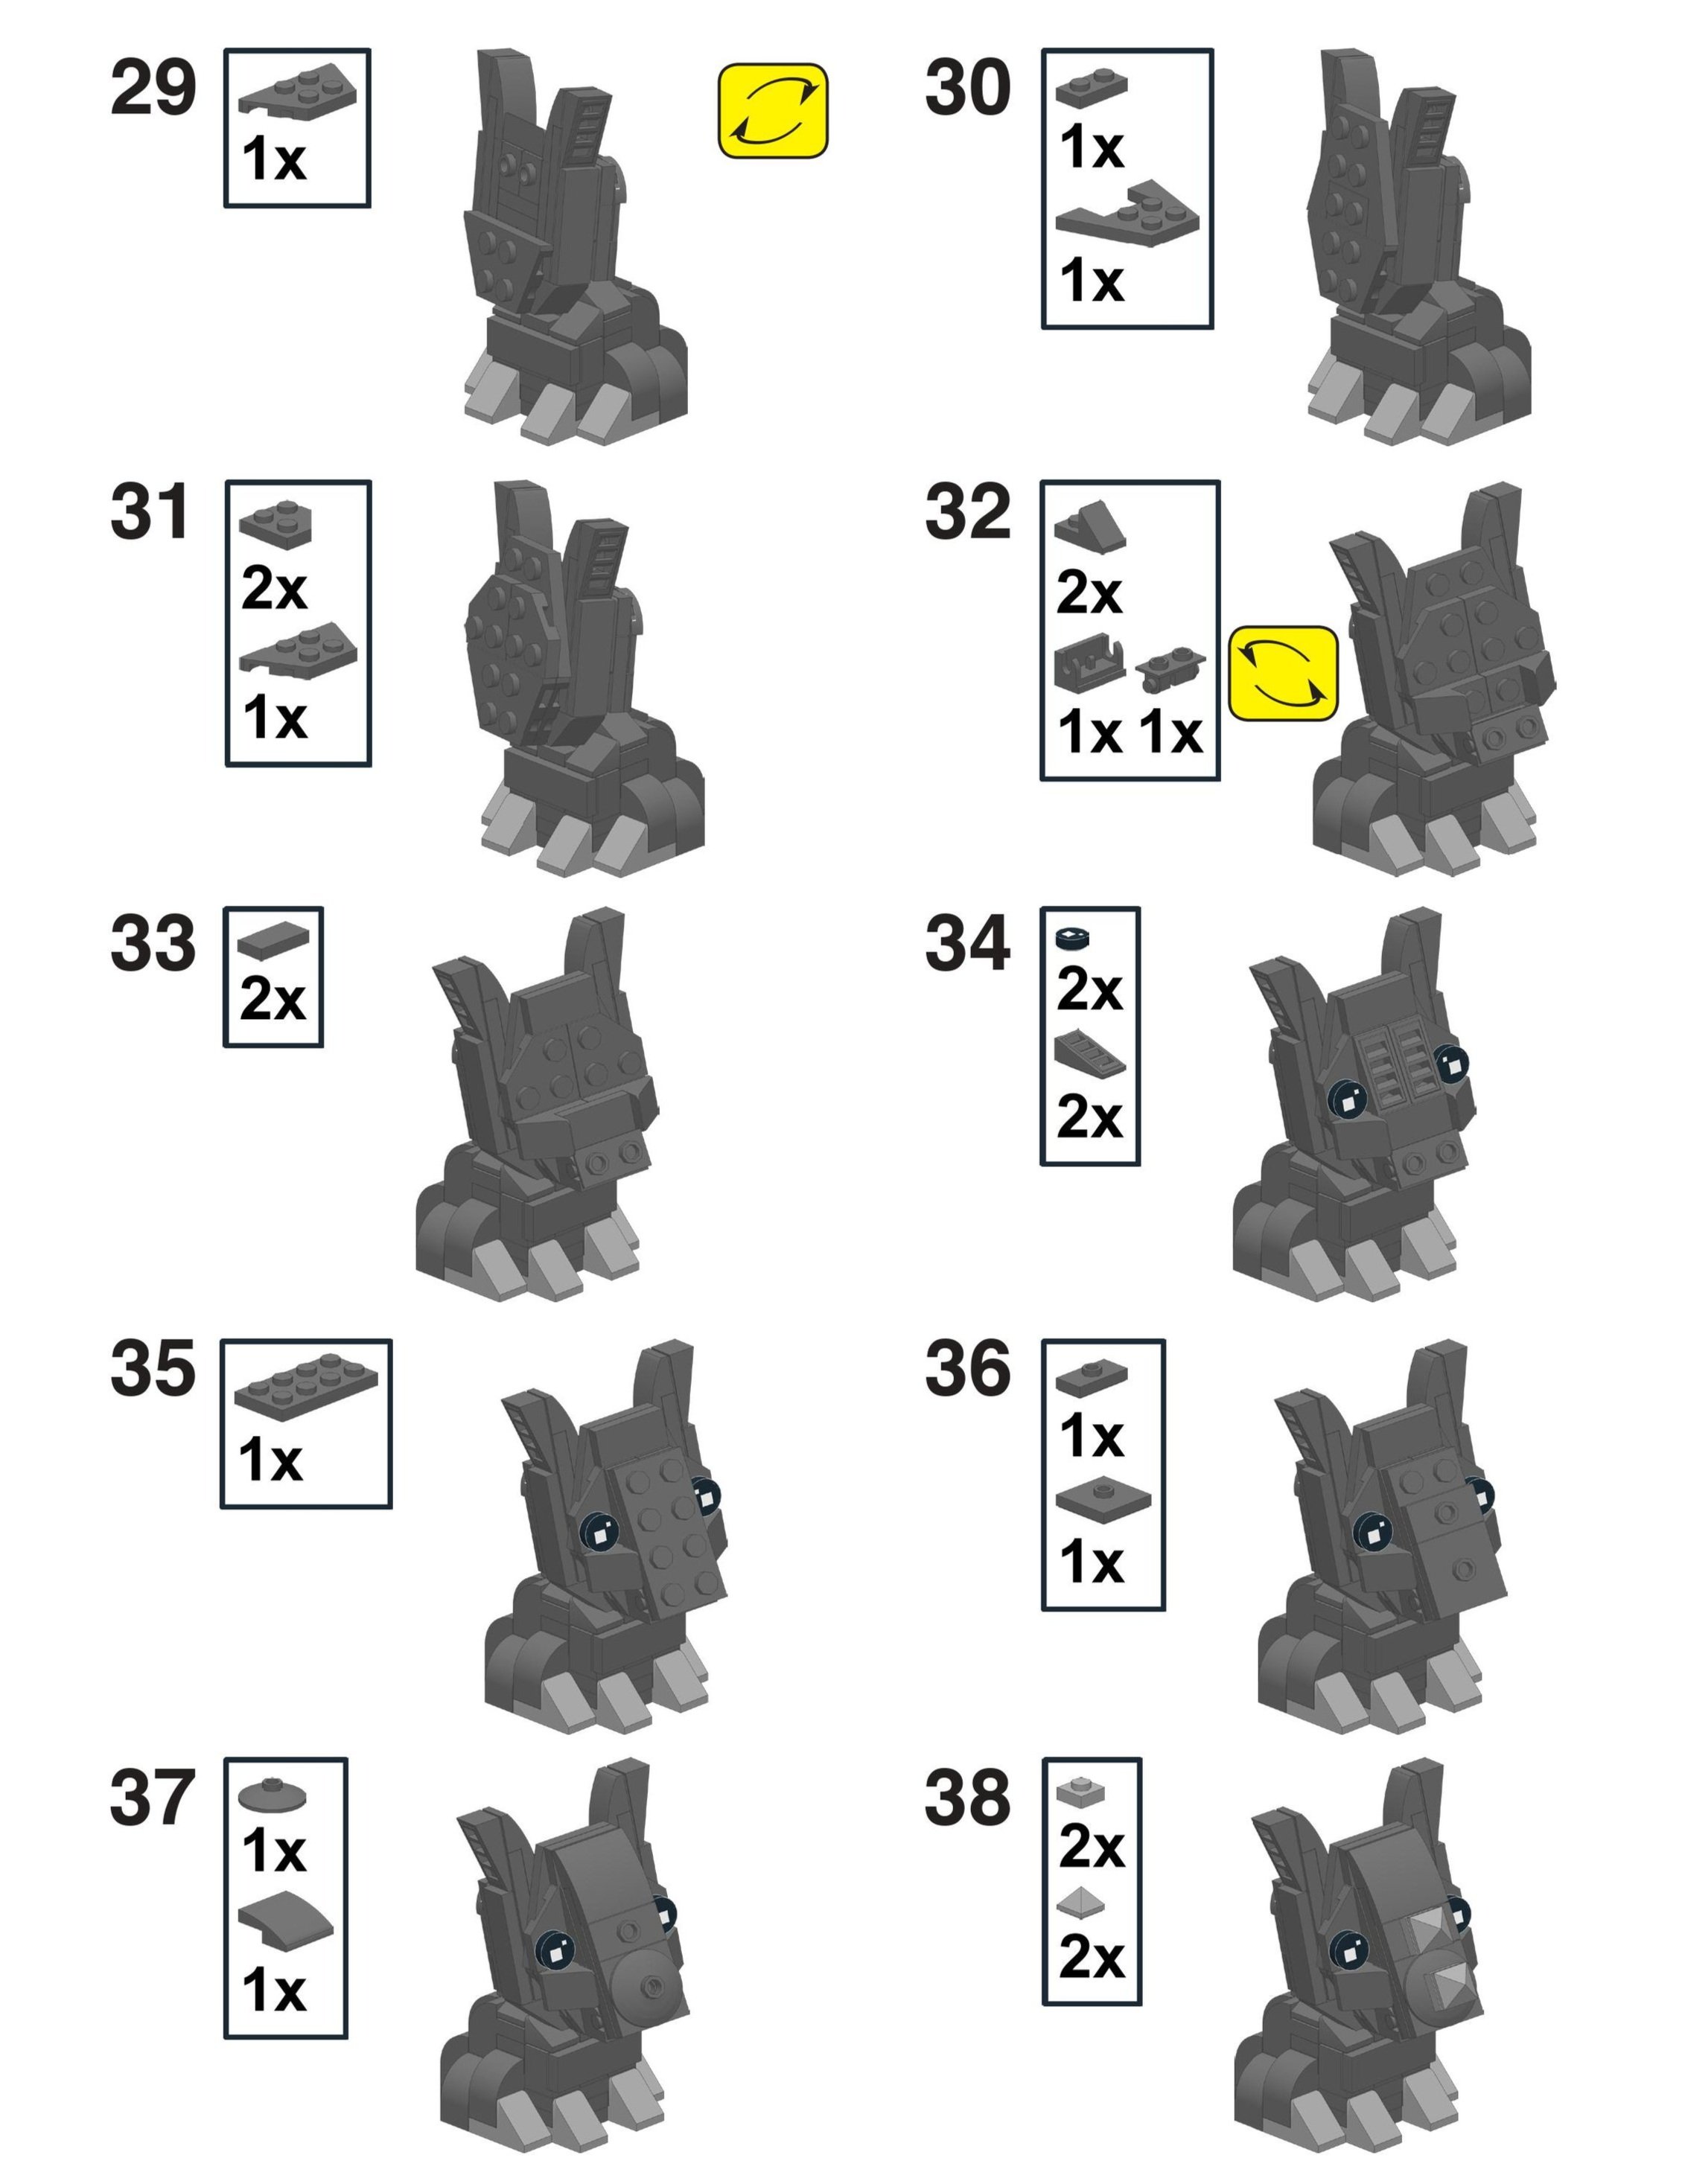 Savannah+BrickPals+Instructions+-+Rhino+-+Part+3.jpg